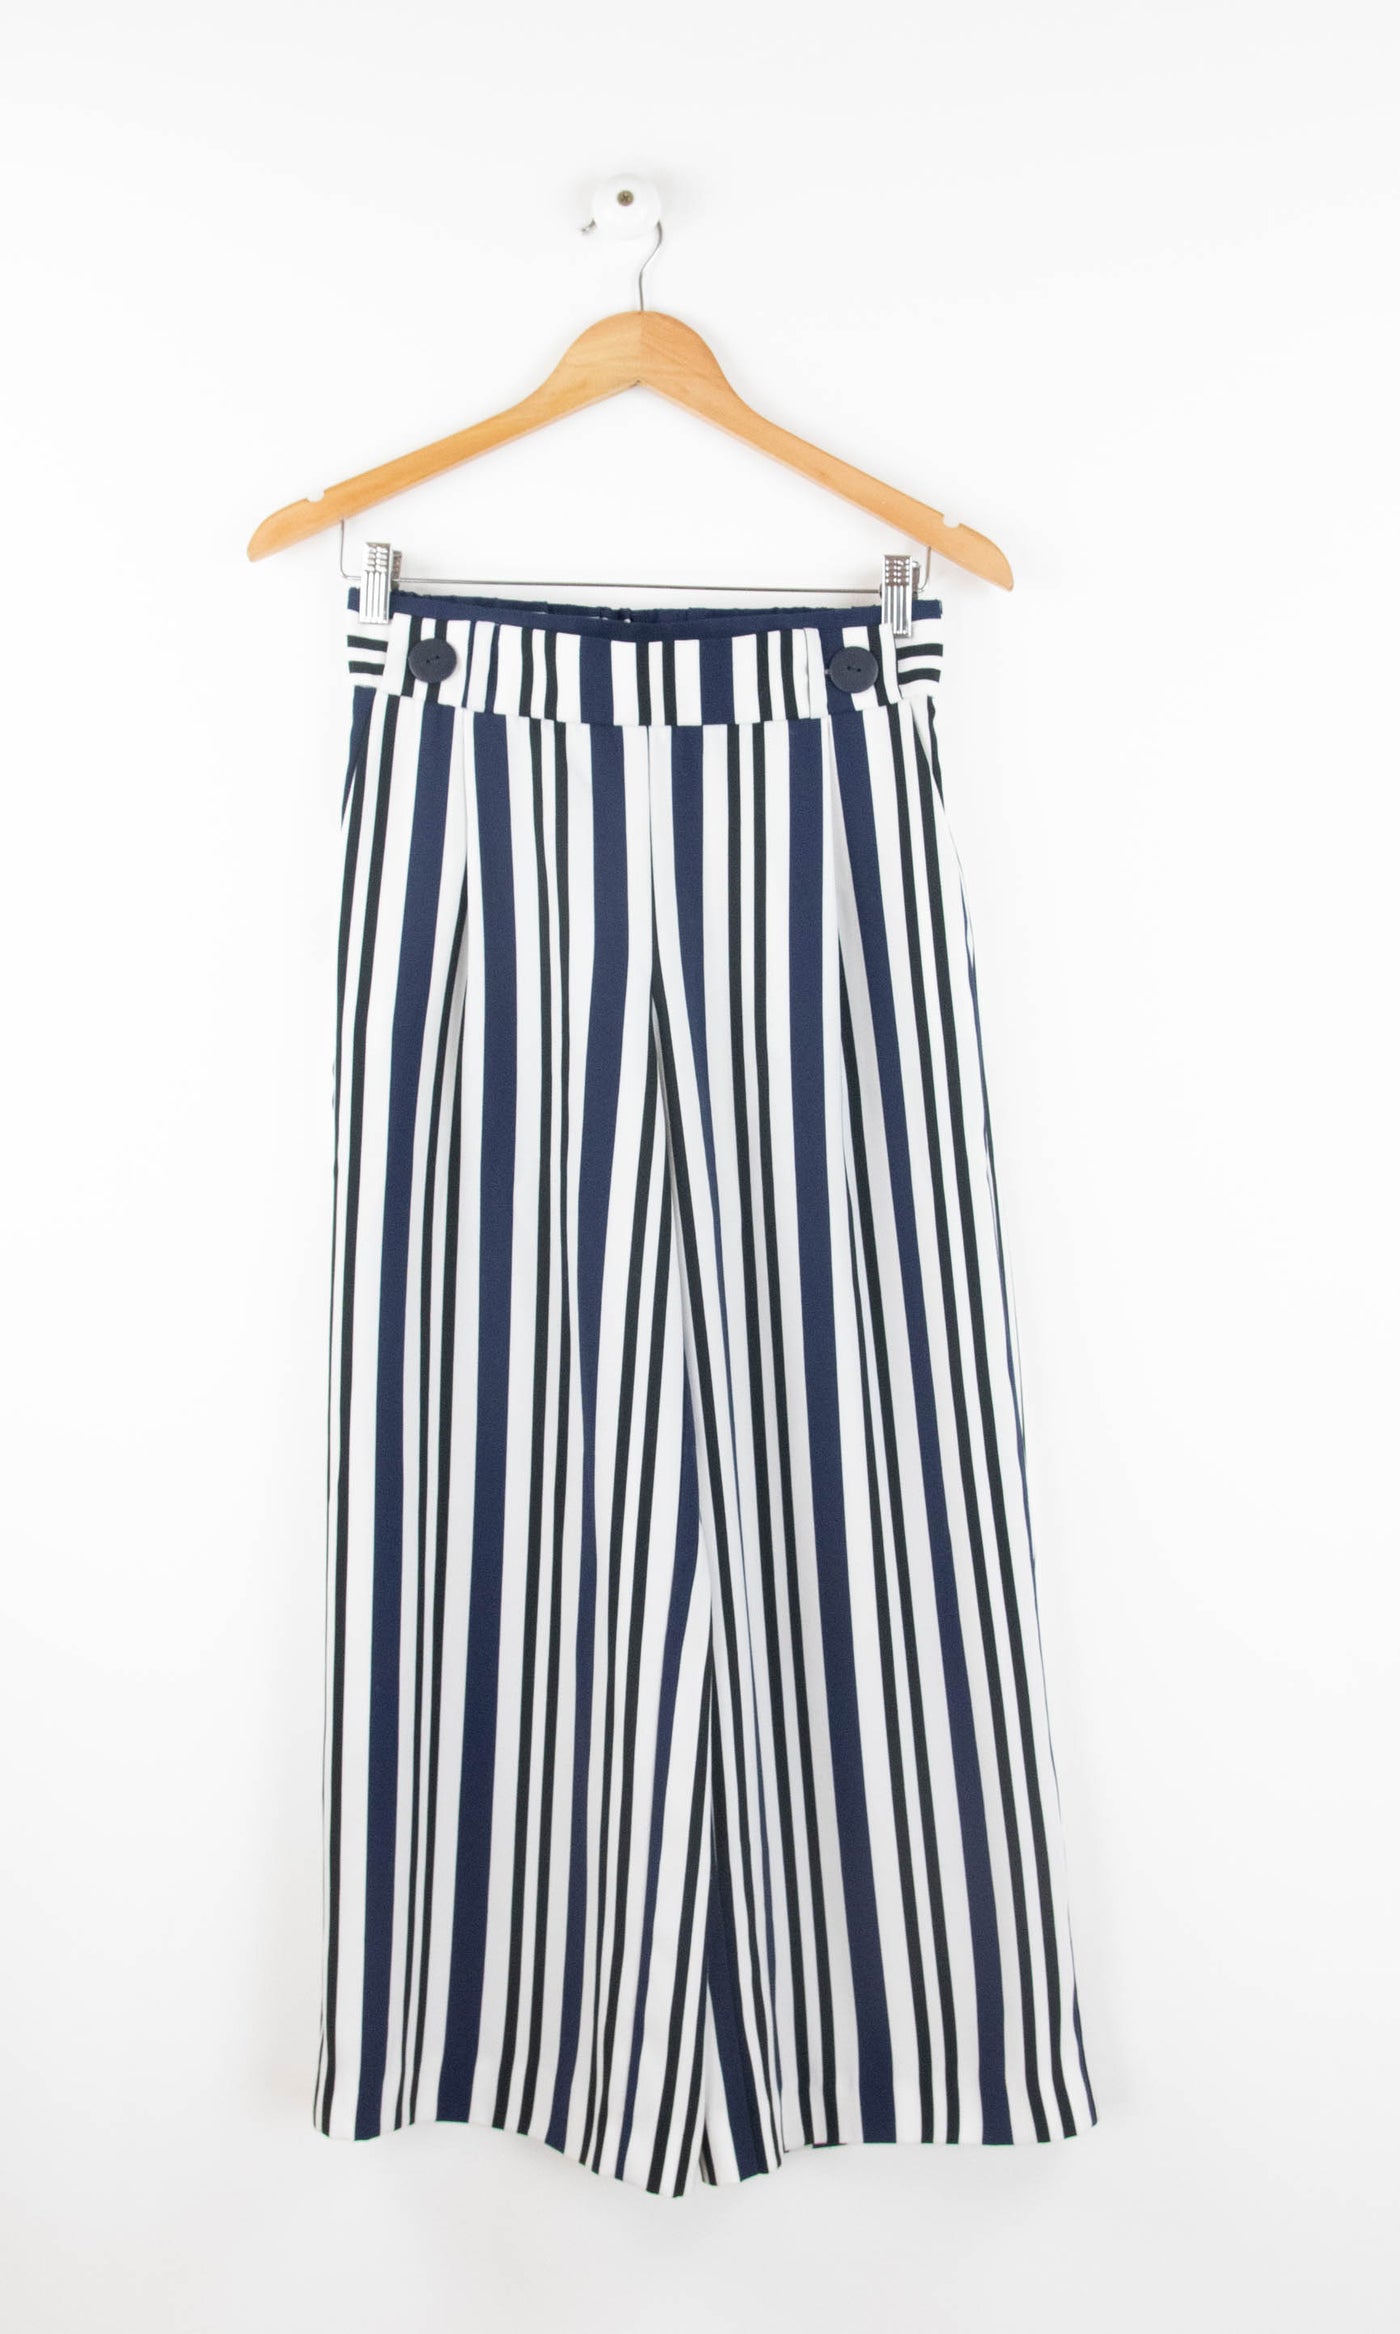 Pantalón ancho de rayas blanco y azul